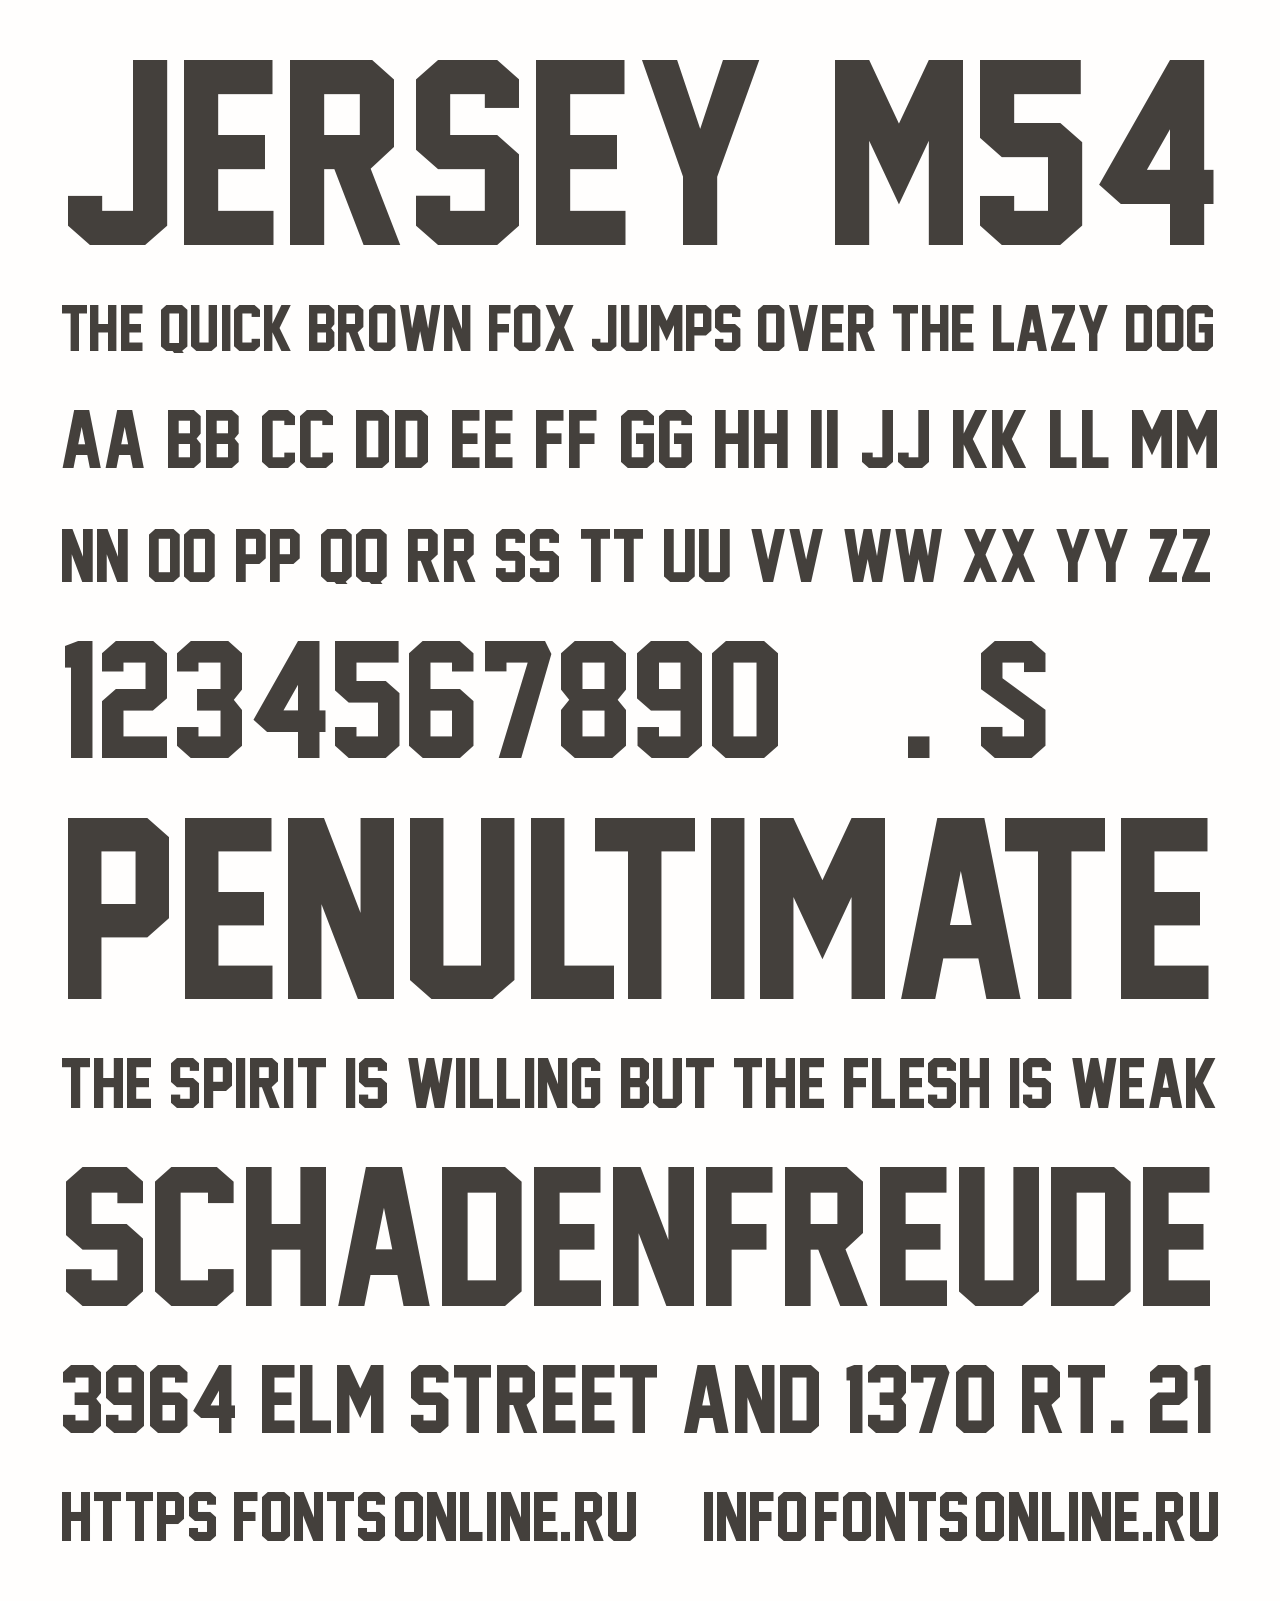 Jersey M54 Font